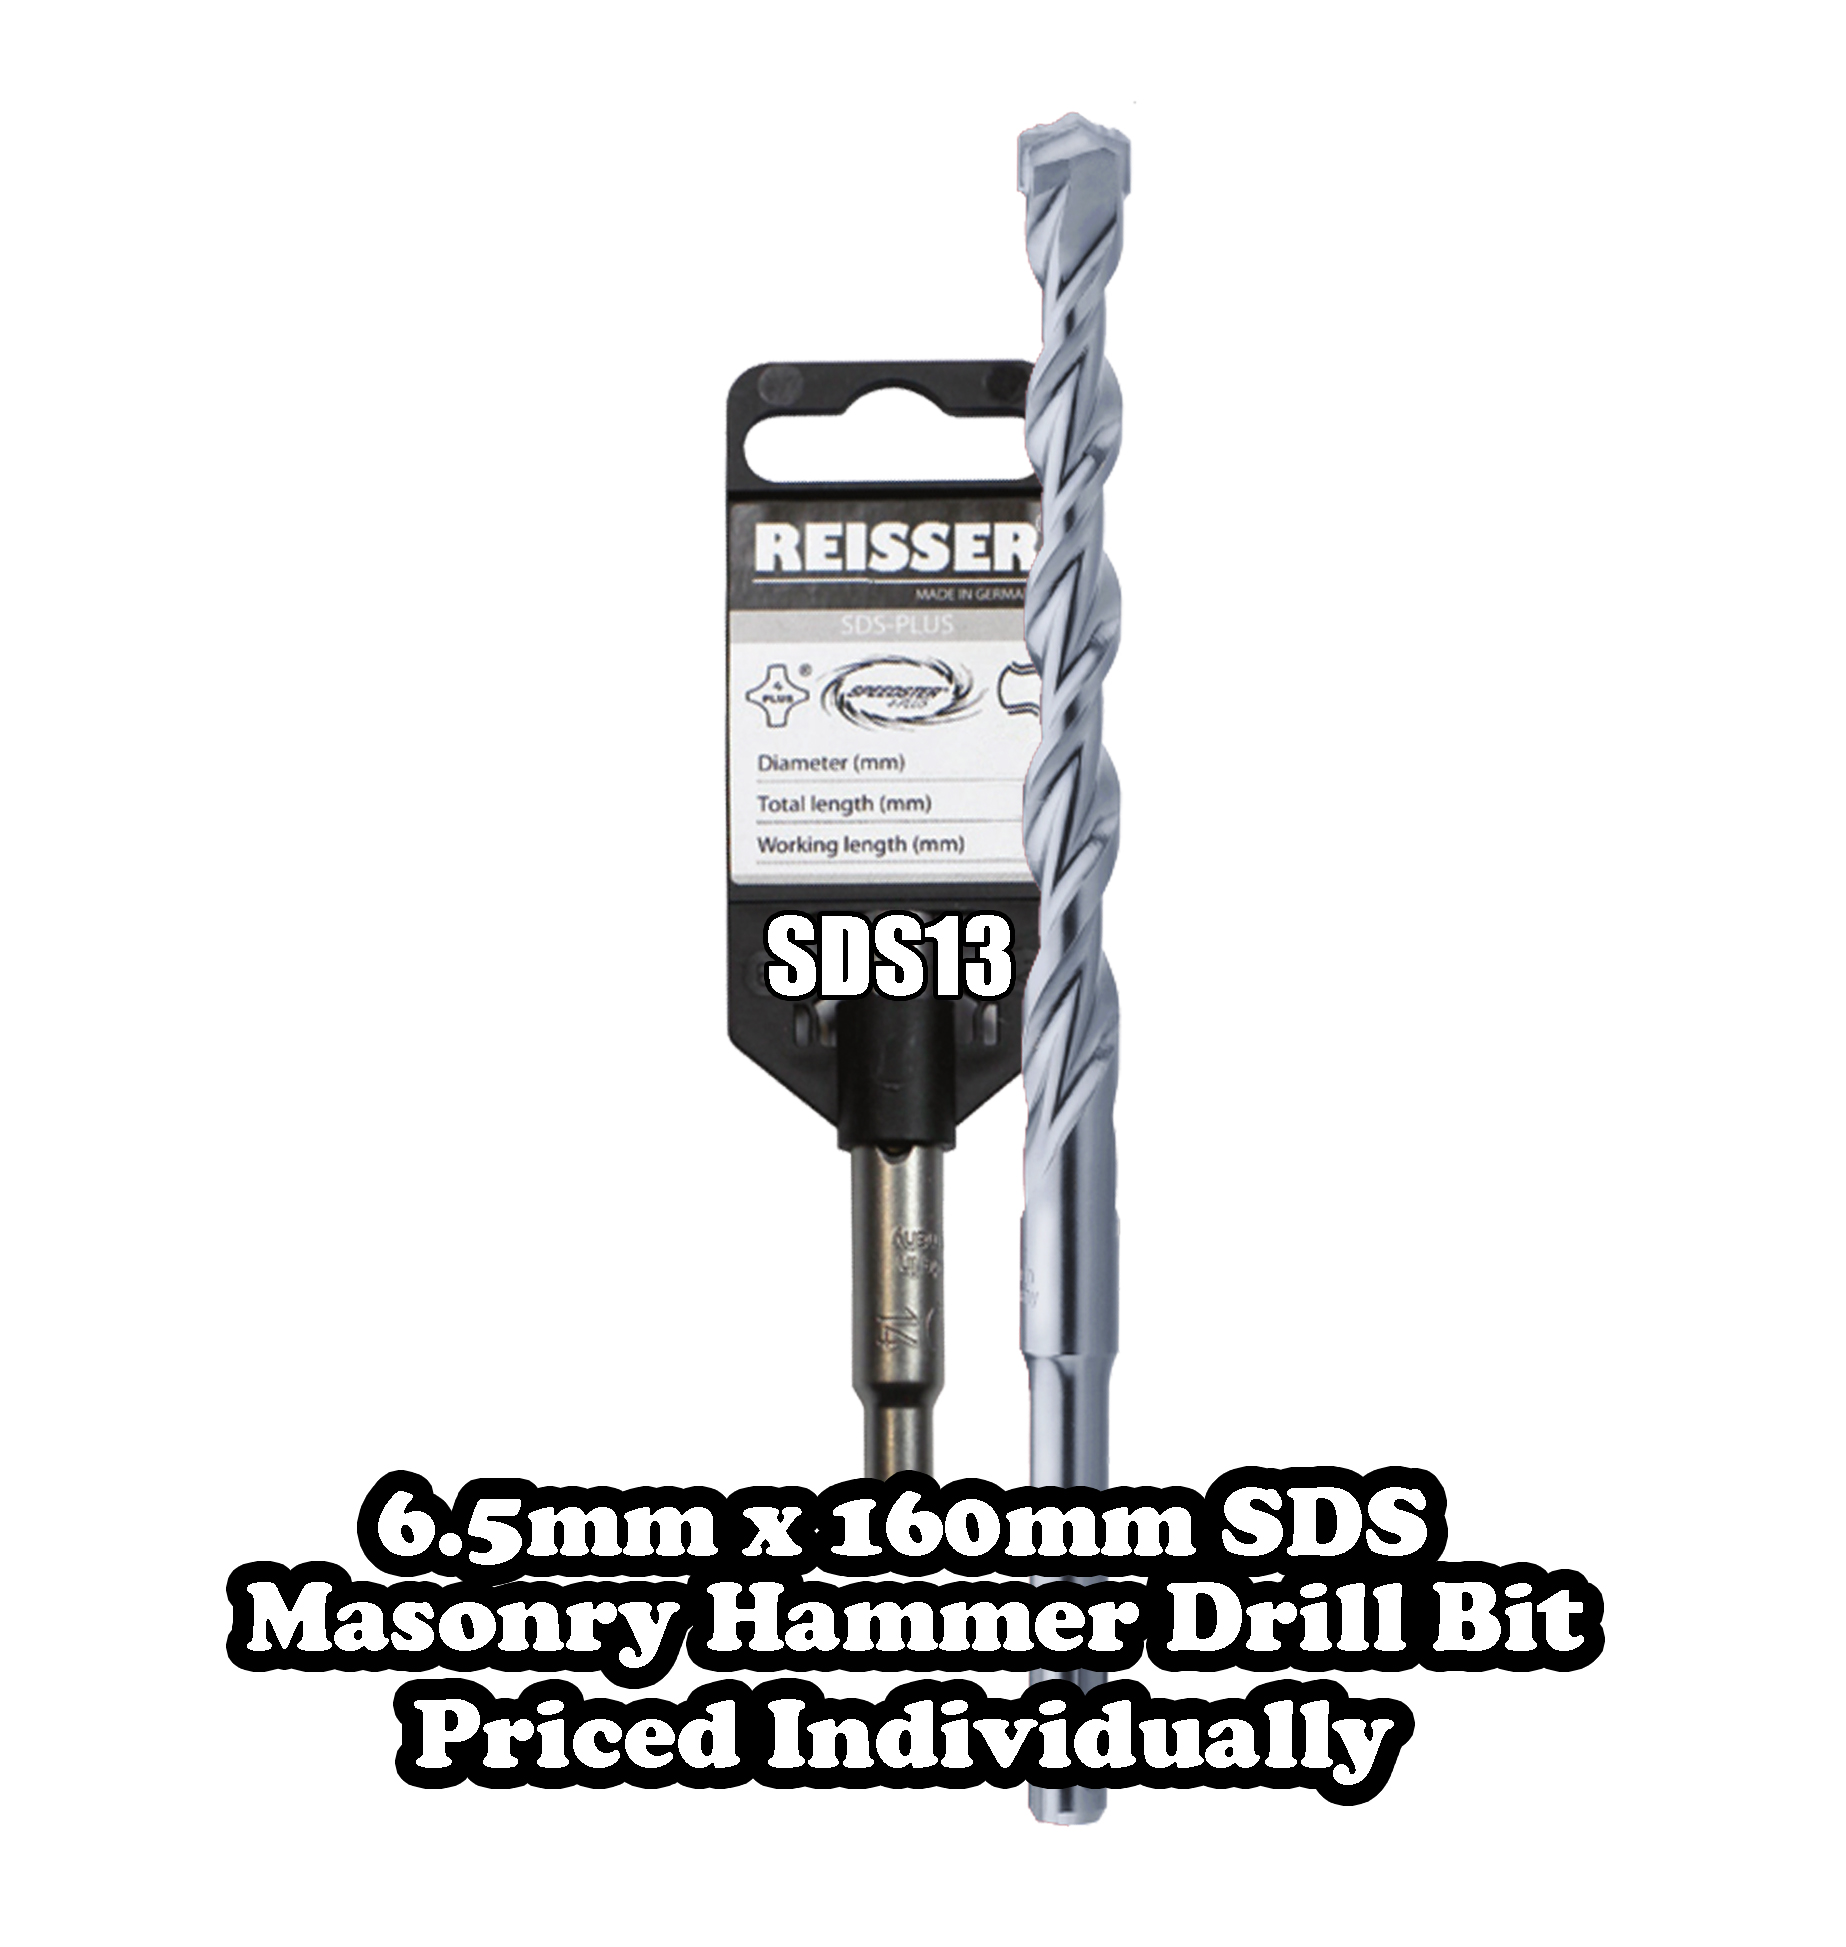 6.5mm x 160mm SDS Masonry Hammer Drill Bit